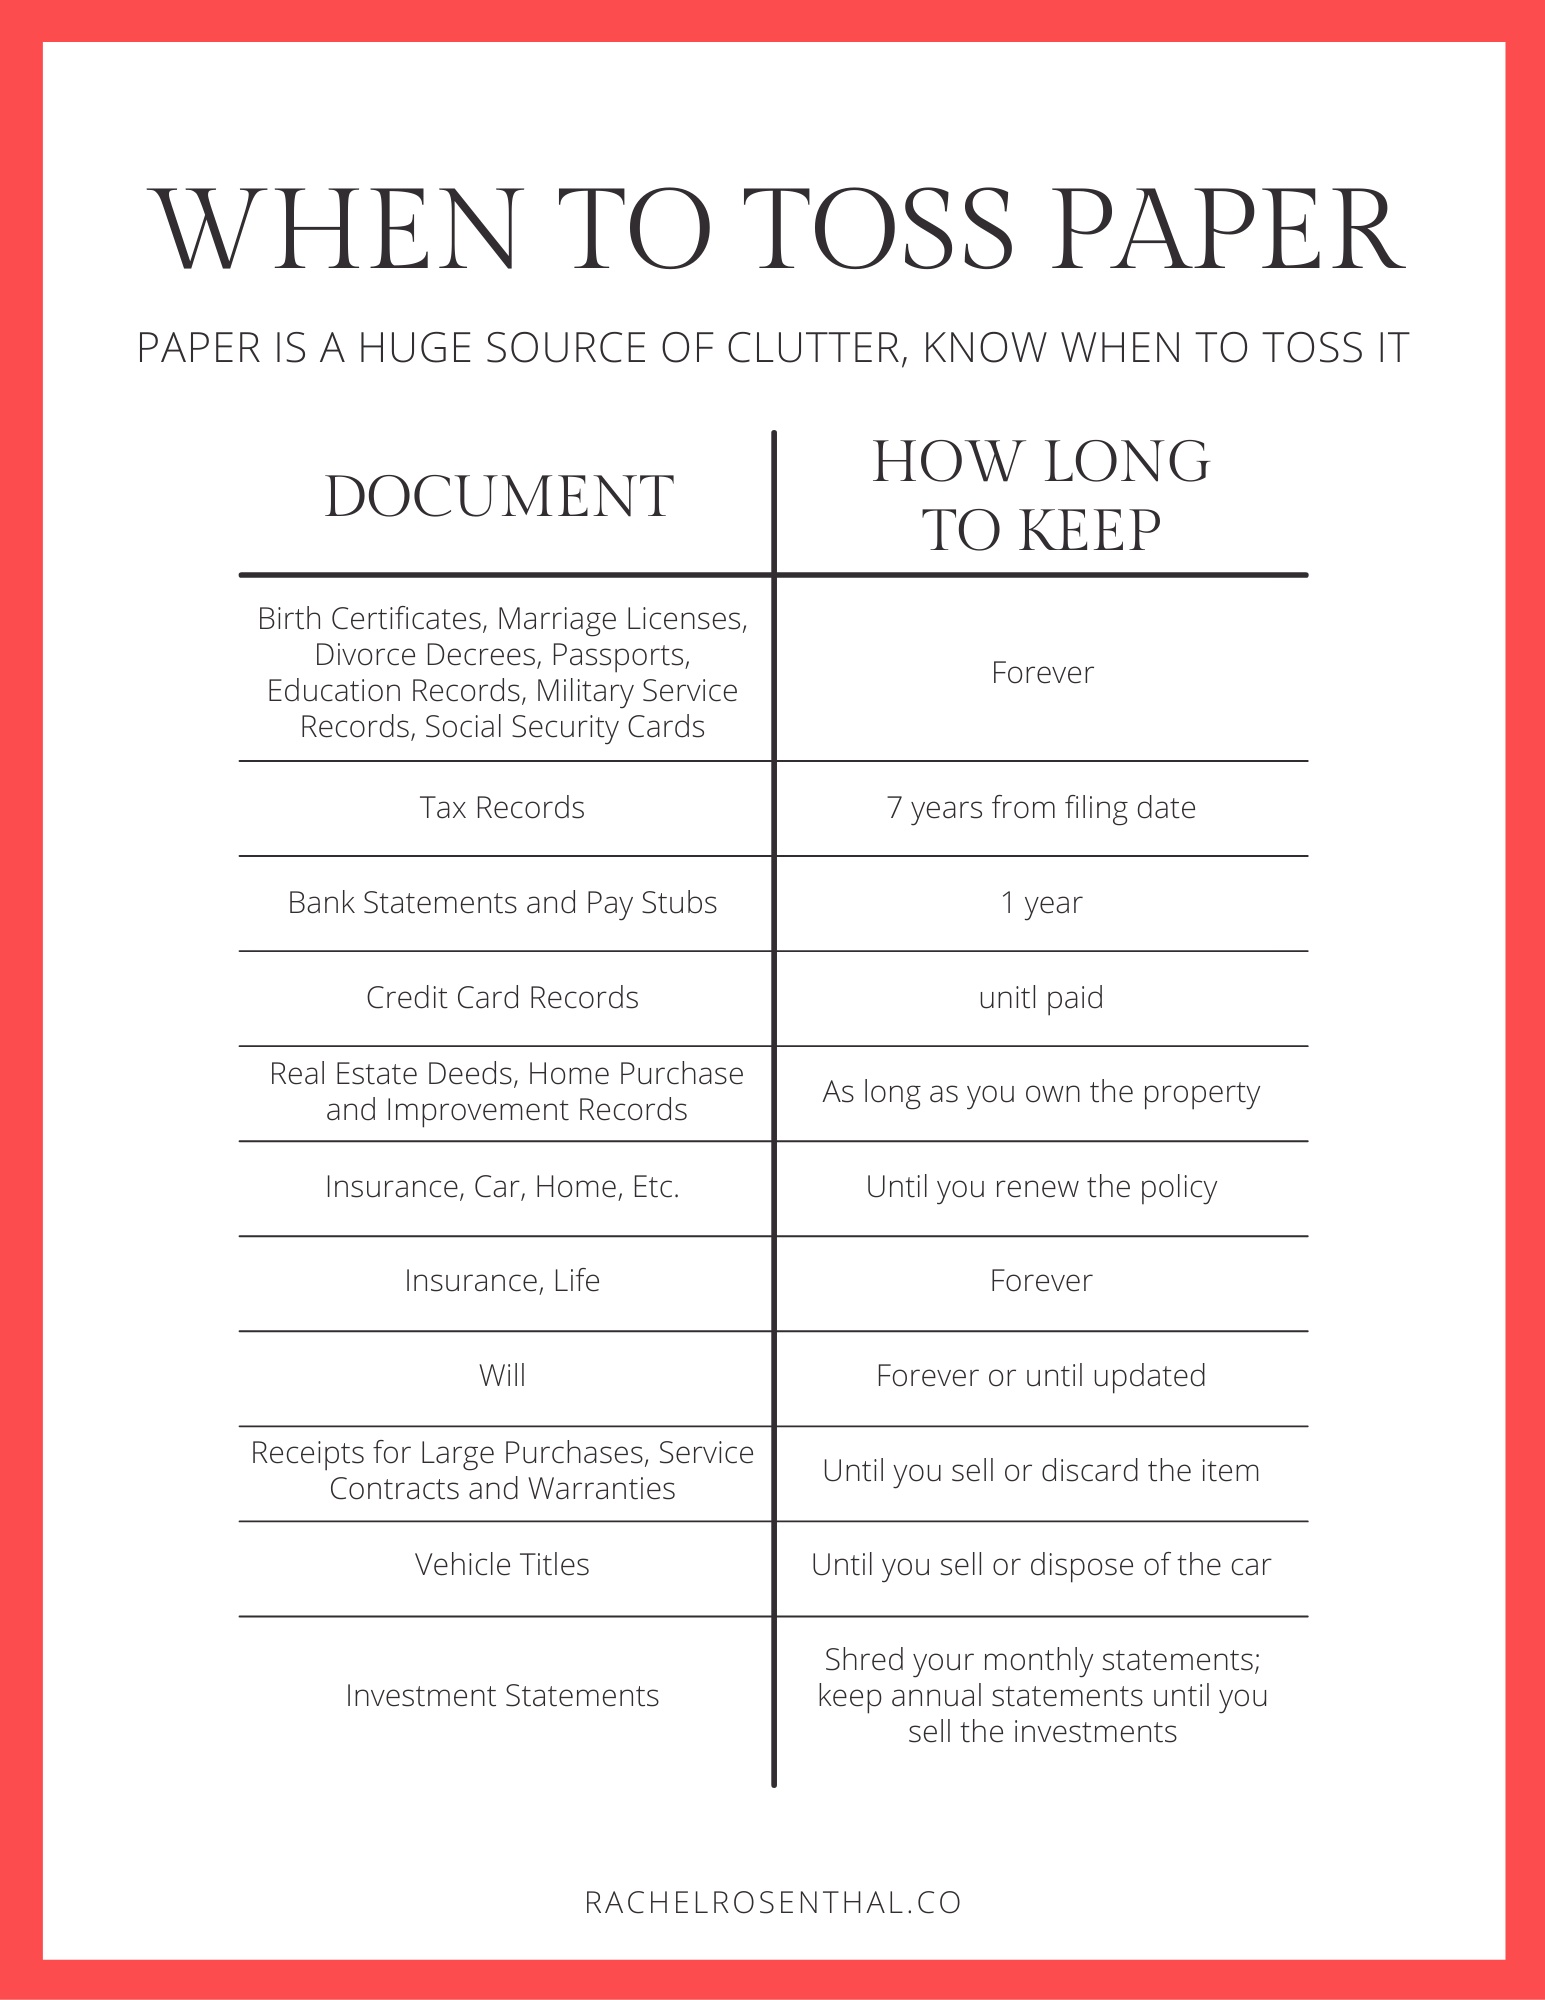 When To Toss Paper - Rachel Rosenthal.png